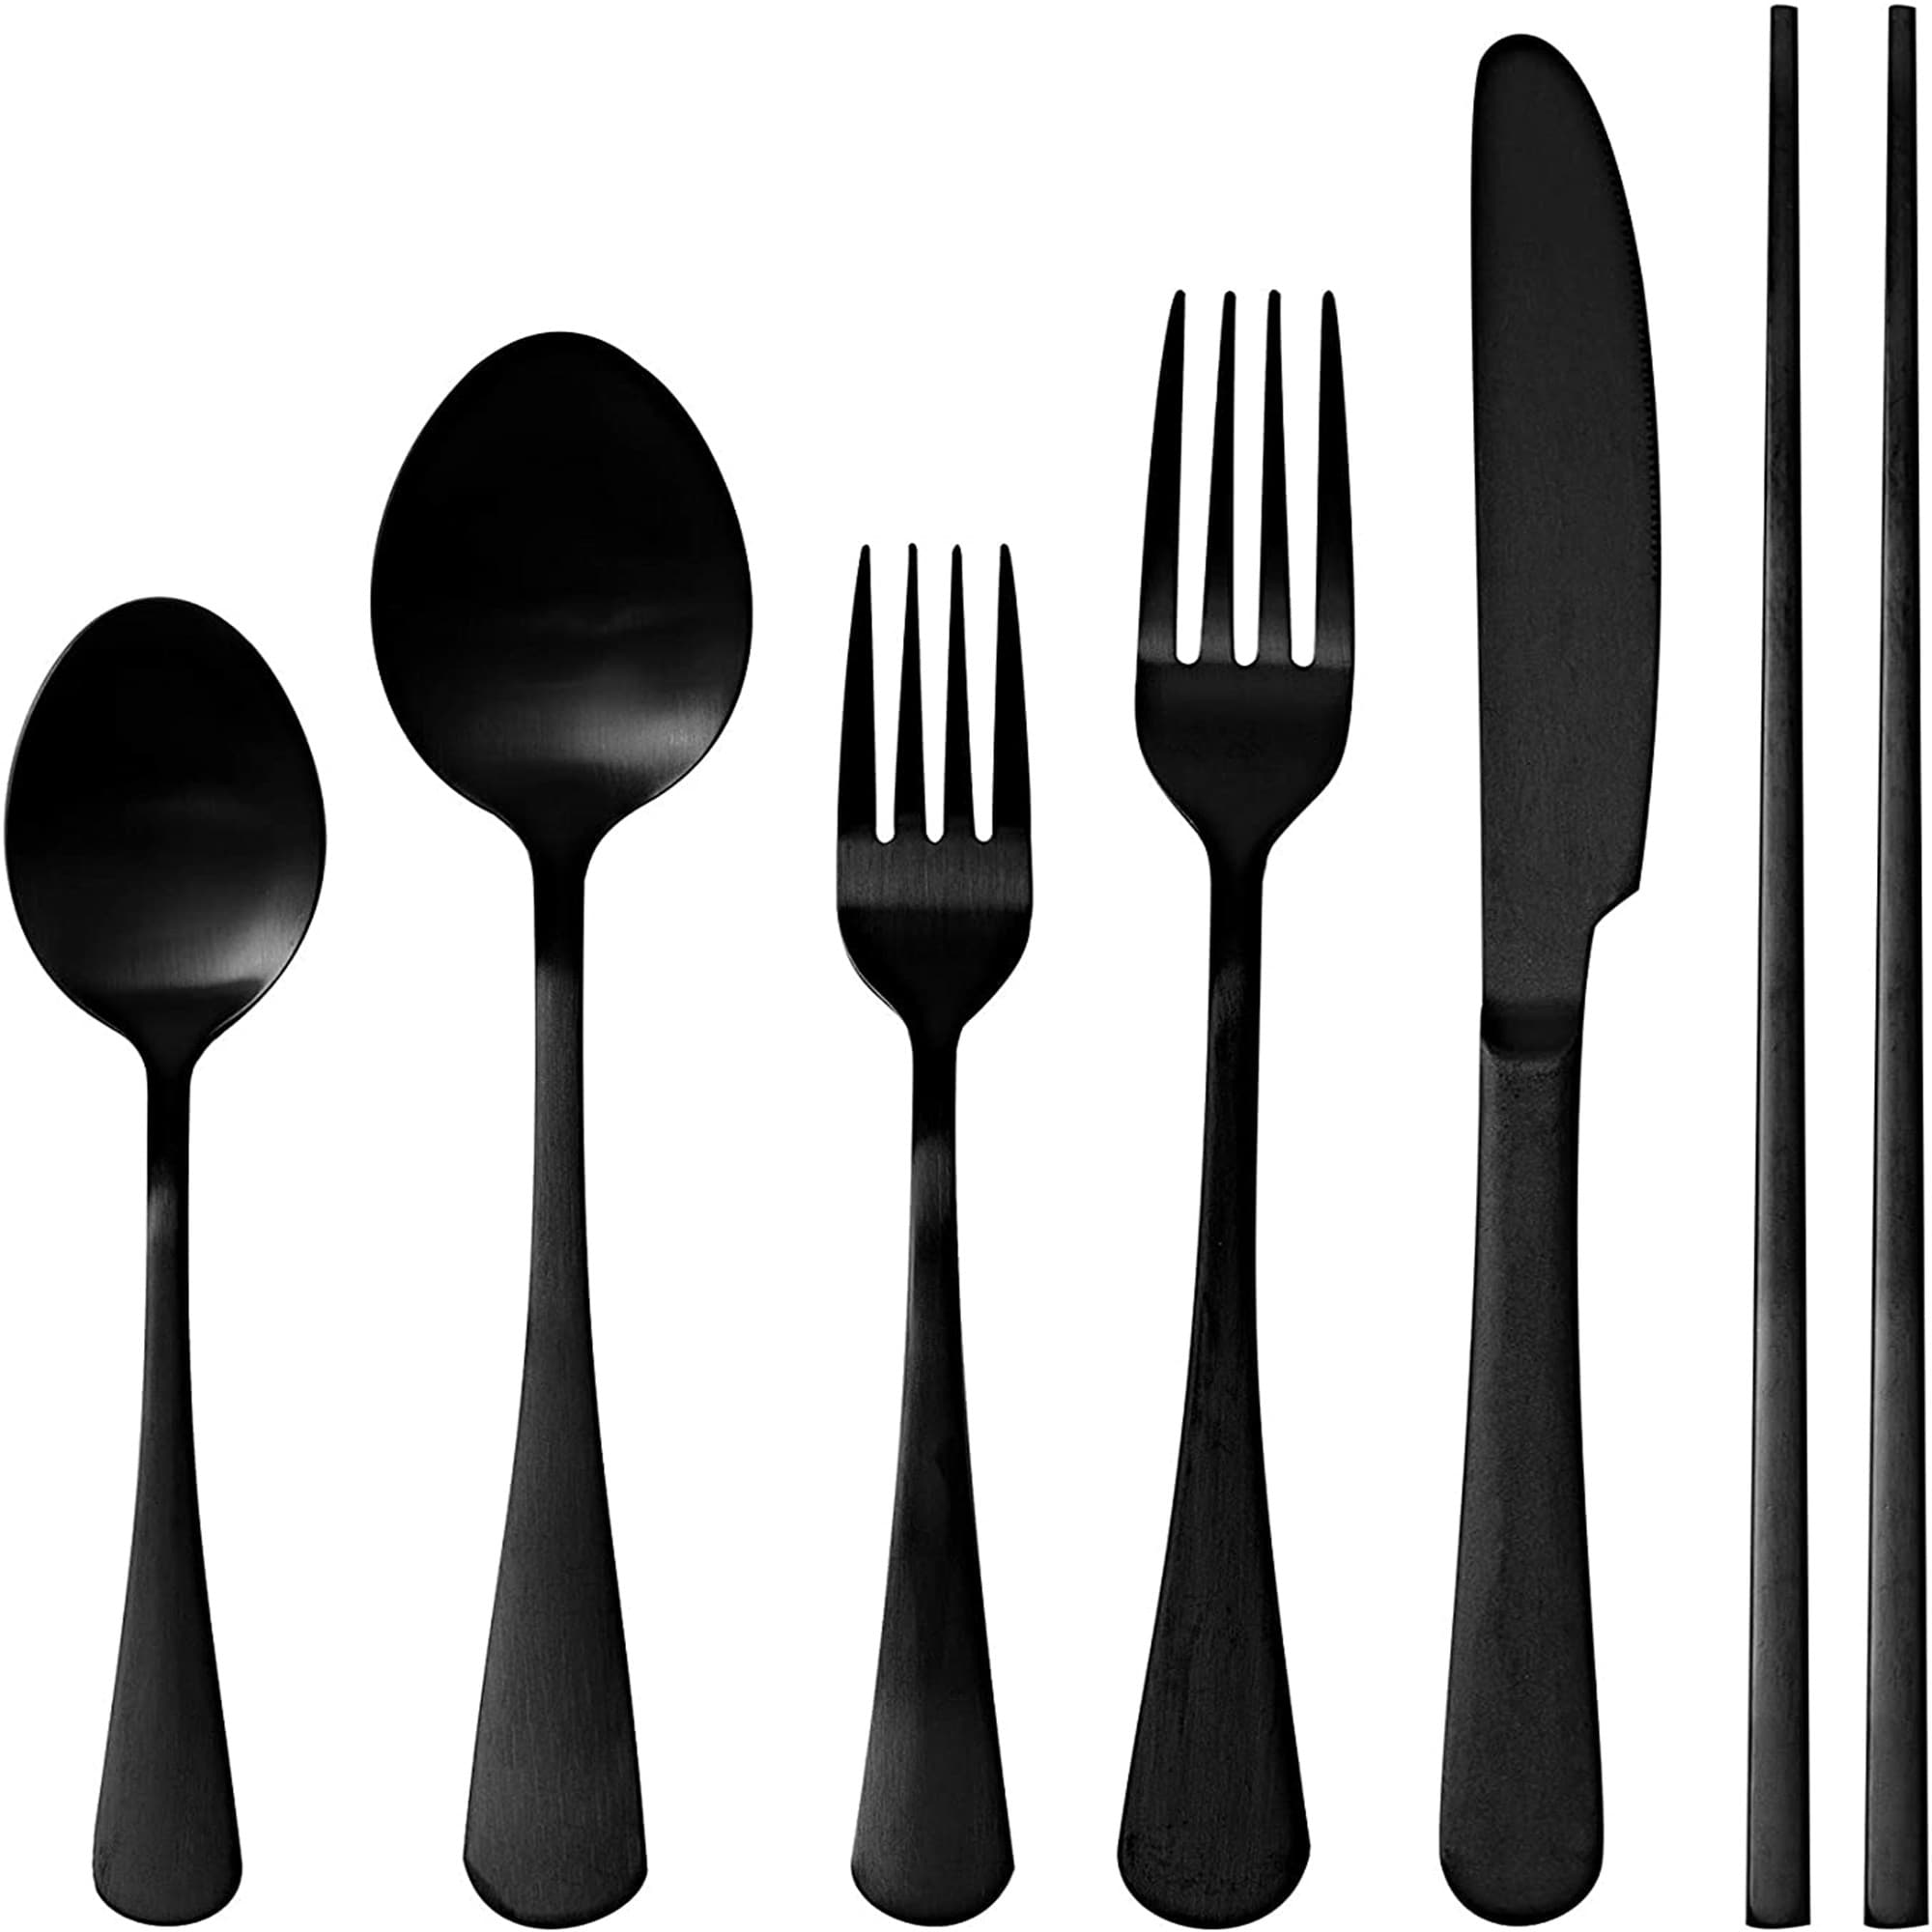 https://ak1.ostkcdn.com/images/products/is/images/direct/67f4eb5c115cdbf1873441355bbda62c3652f248/Kitchen-Comfort-%7C-24-Piece-Matte-Black-Finish-%7C-Flatware-Set-%7C-Stainless-Steel-Cutlery-Set-for-4-%2B-Chop-Sticks%21.jpg